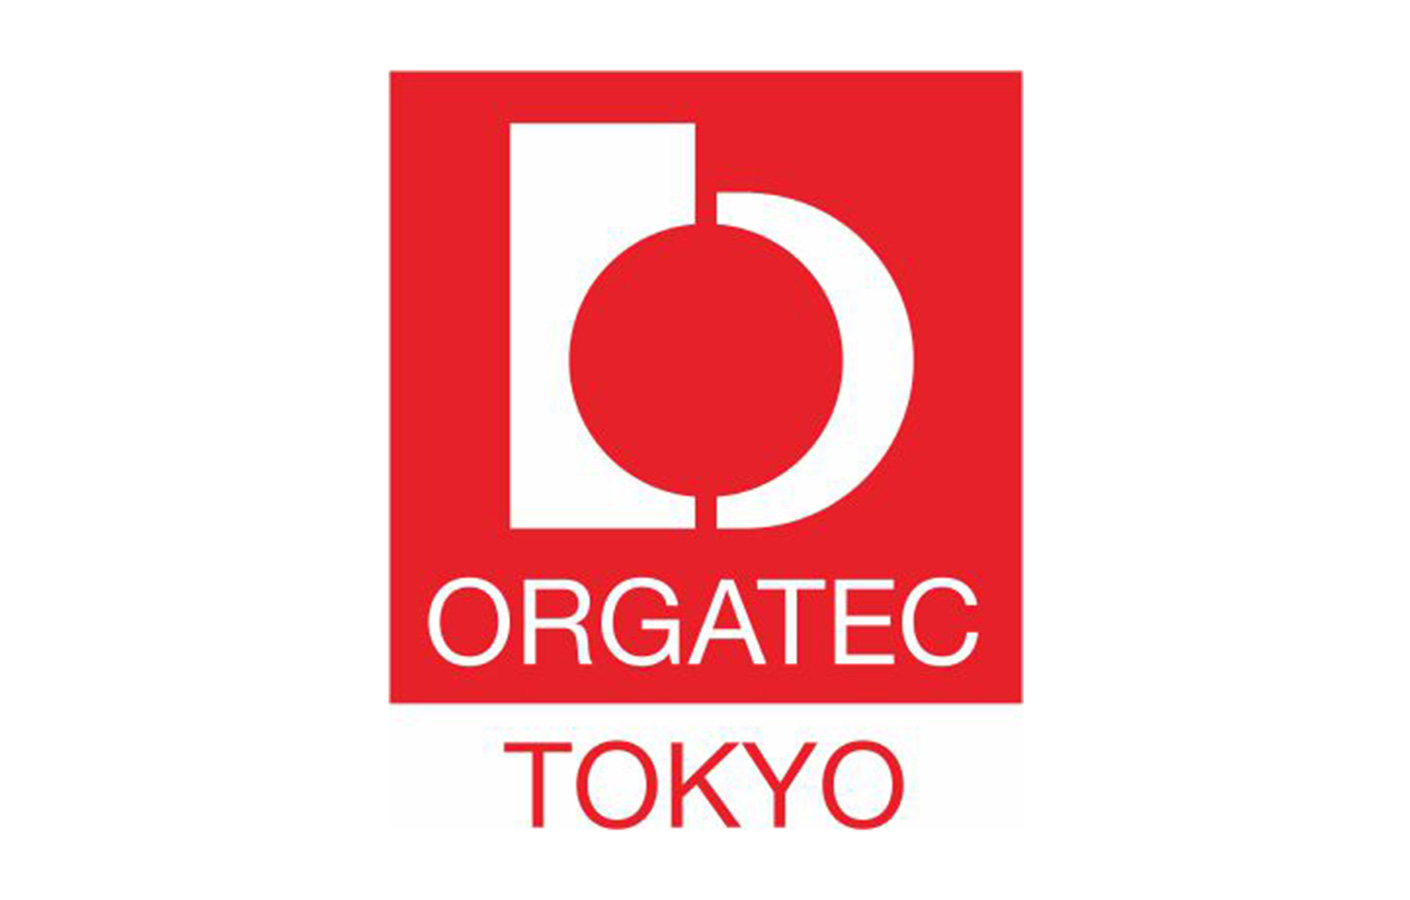 ORGATEC TOKYO